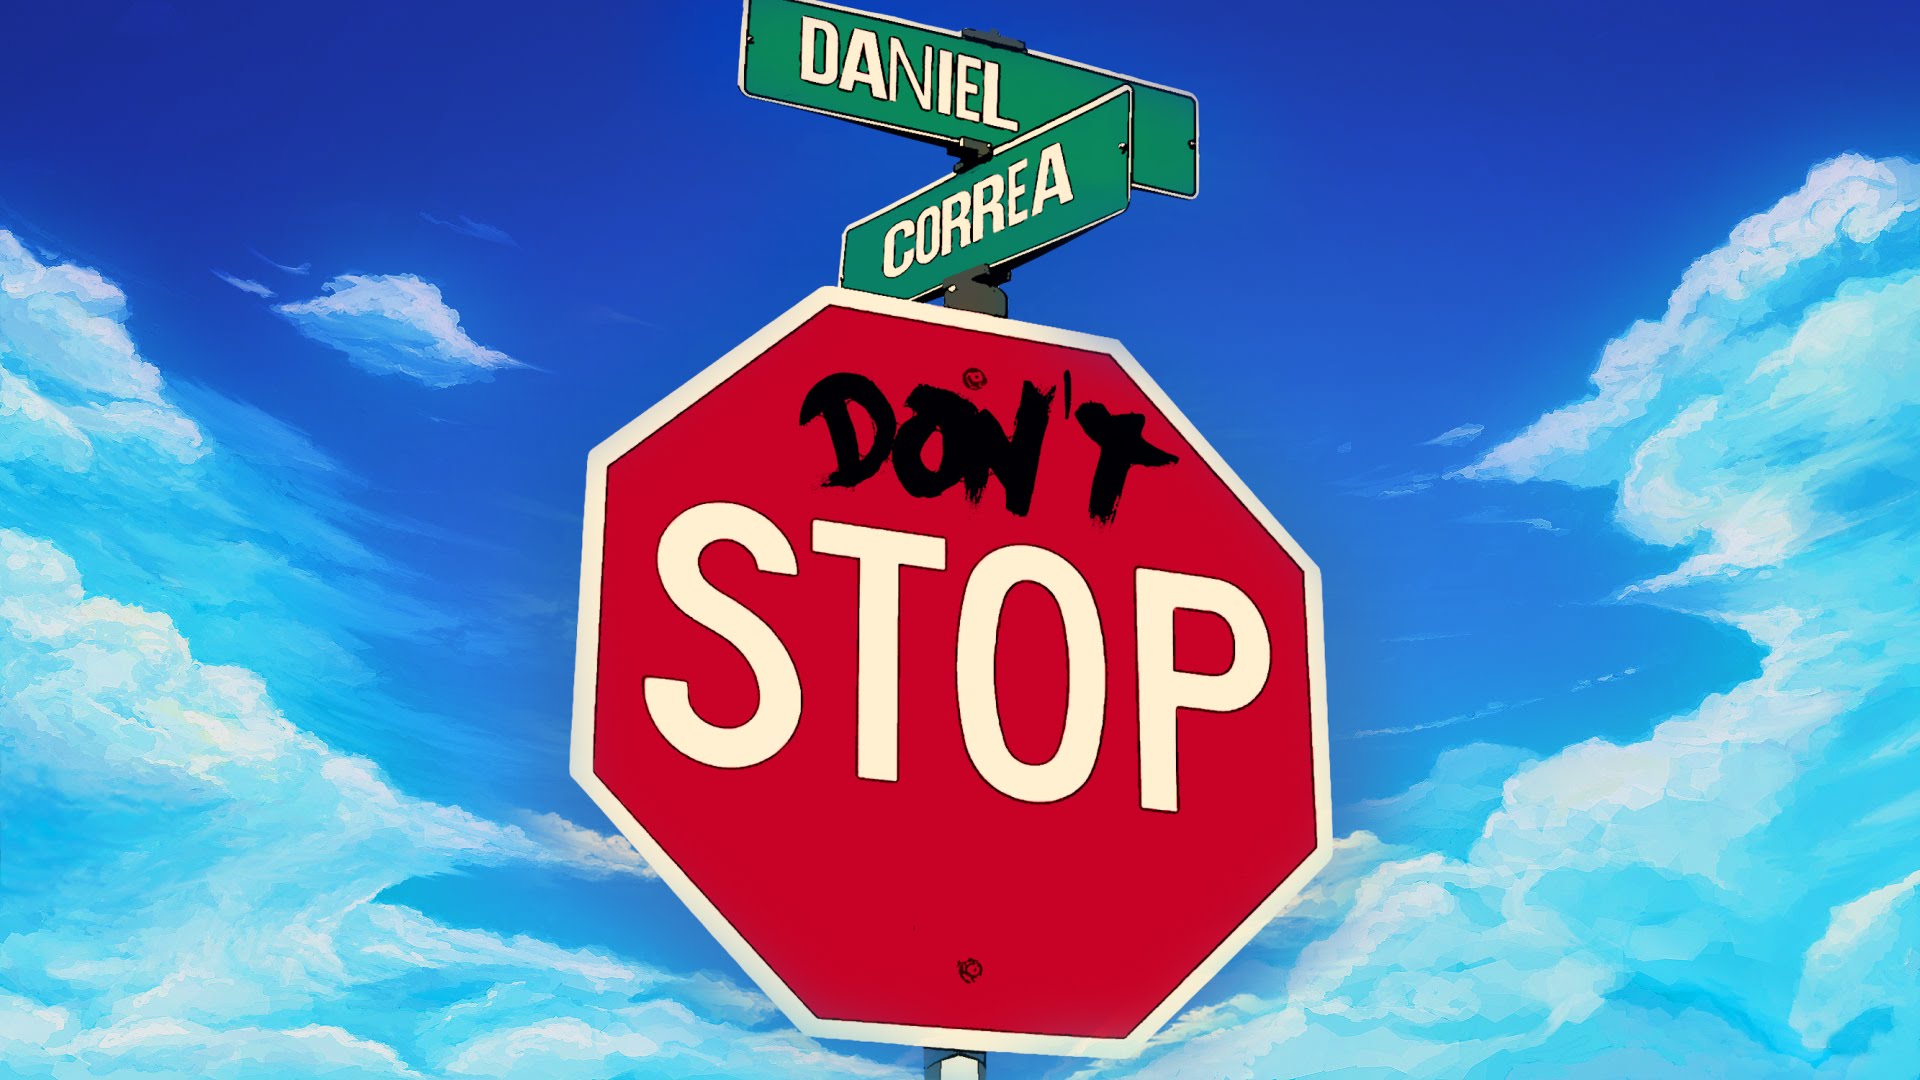 Daniel Correa “Don’t Stop”